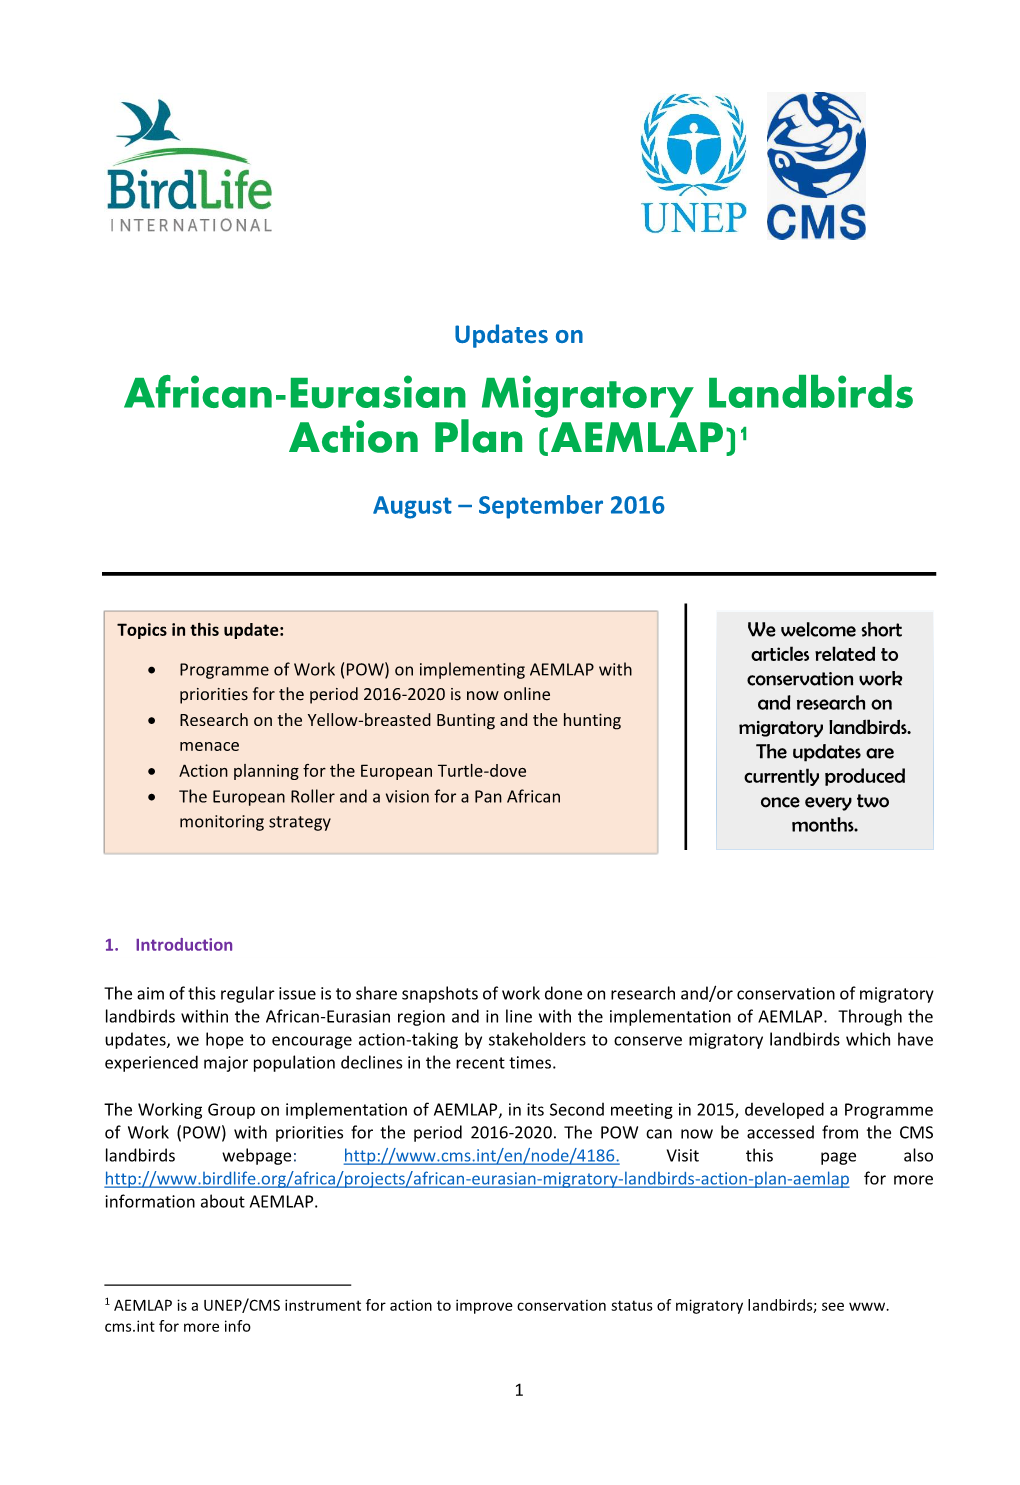 African-Eurasian Migratory Landbirds Action Plan (AEMLAP)1